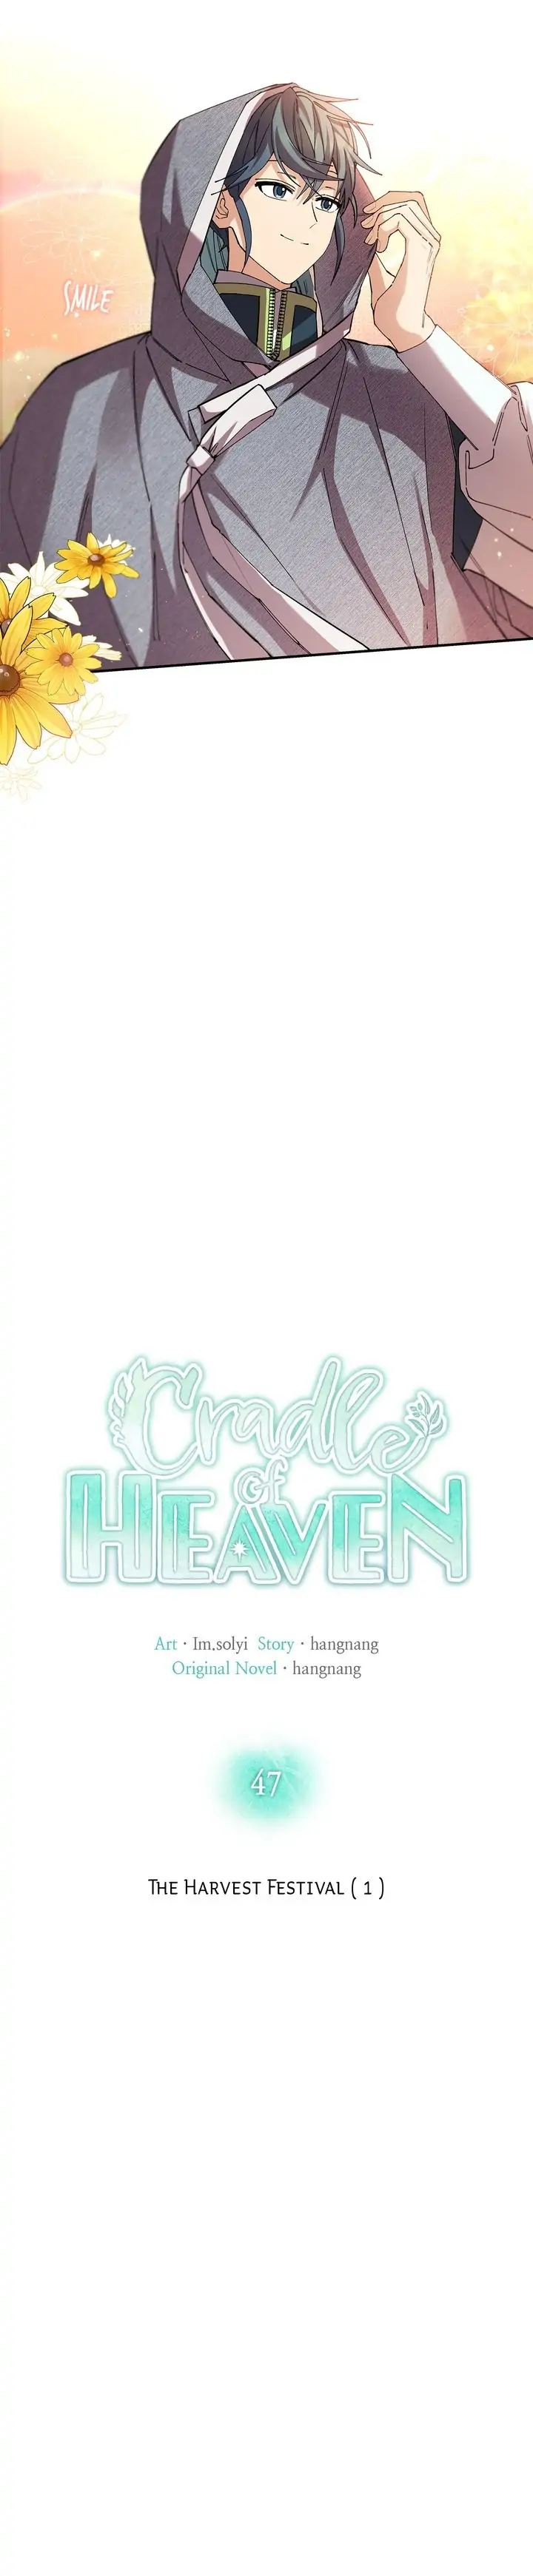 Cradle of Heaven chapter 47